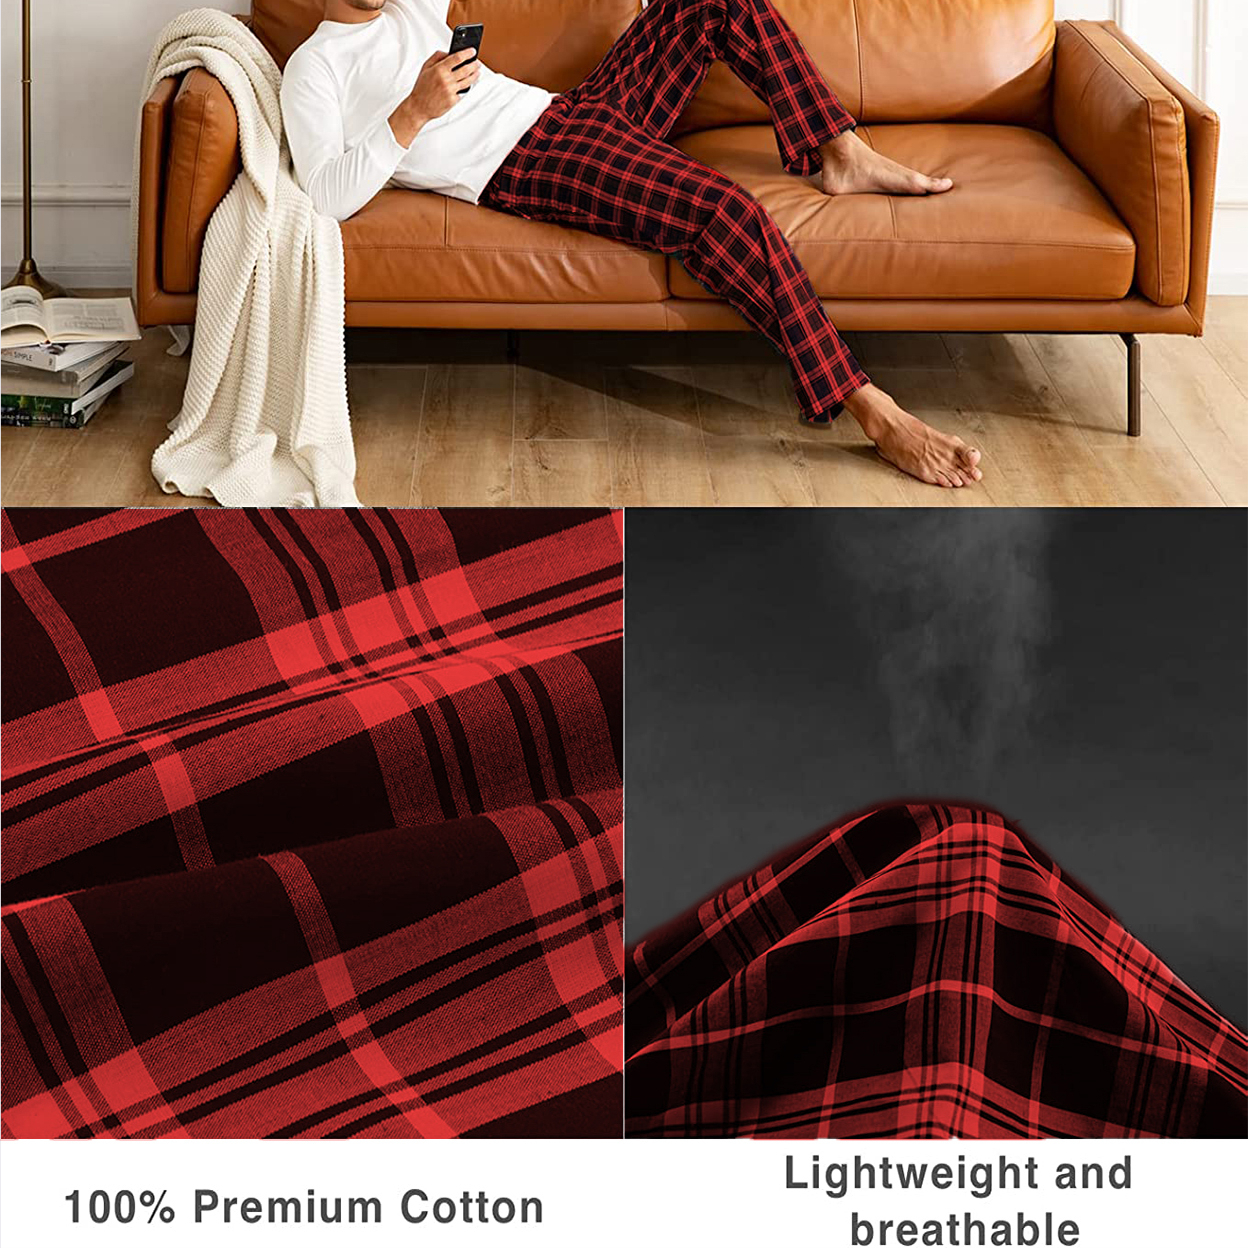 3-Pack: Men's Soft 100% Cotton Flannel Plaid Lounge Pajama Sleep Pants - X-Large